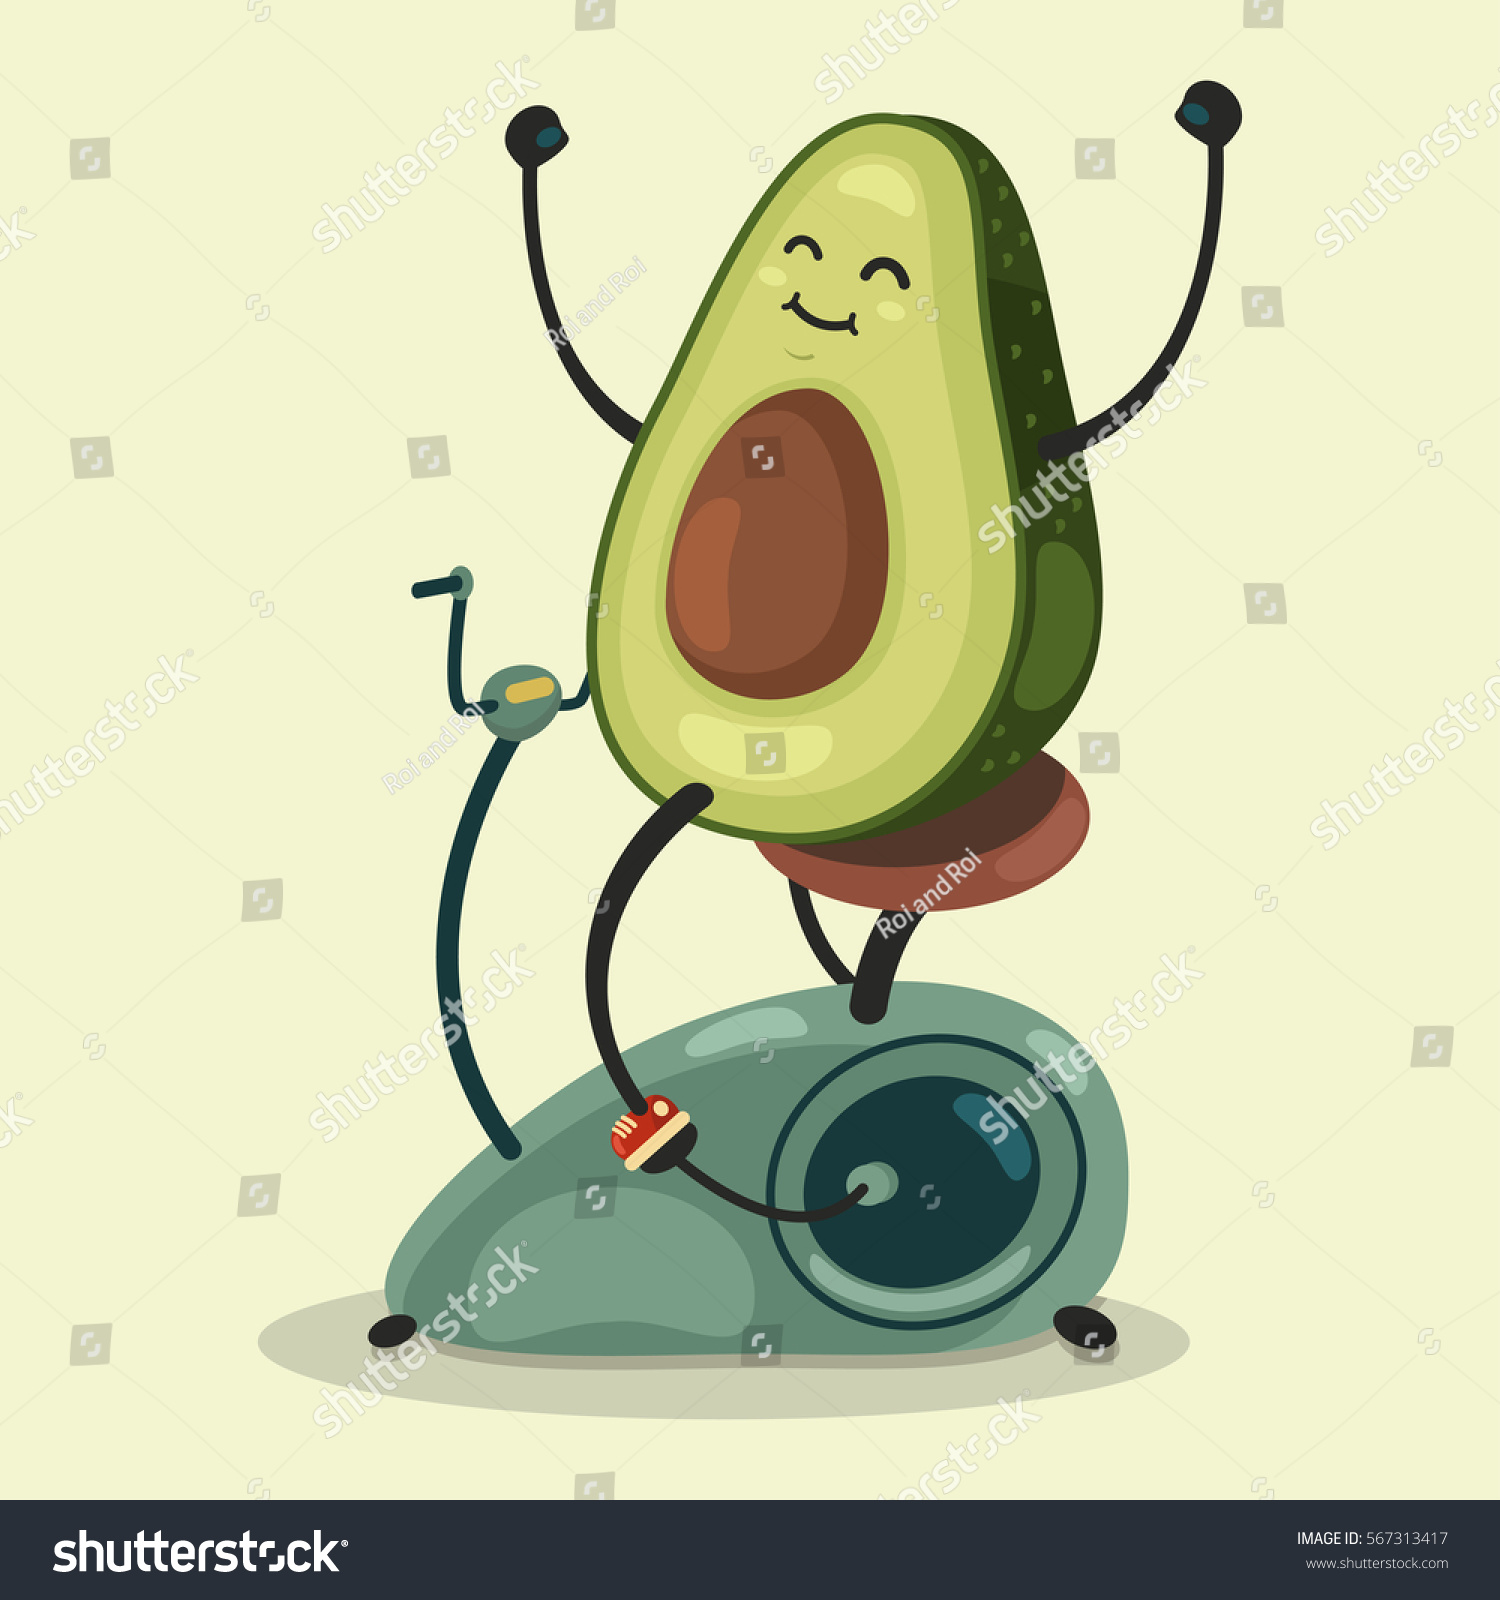 avocado bike